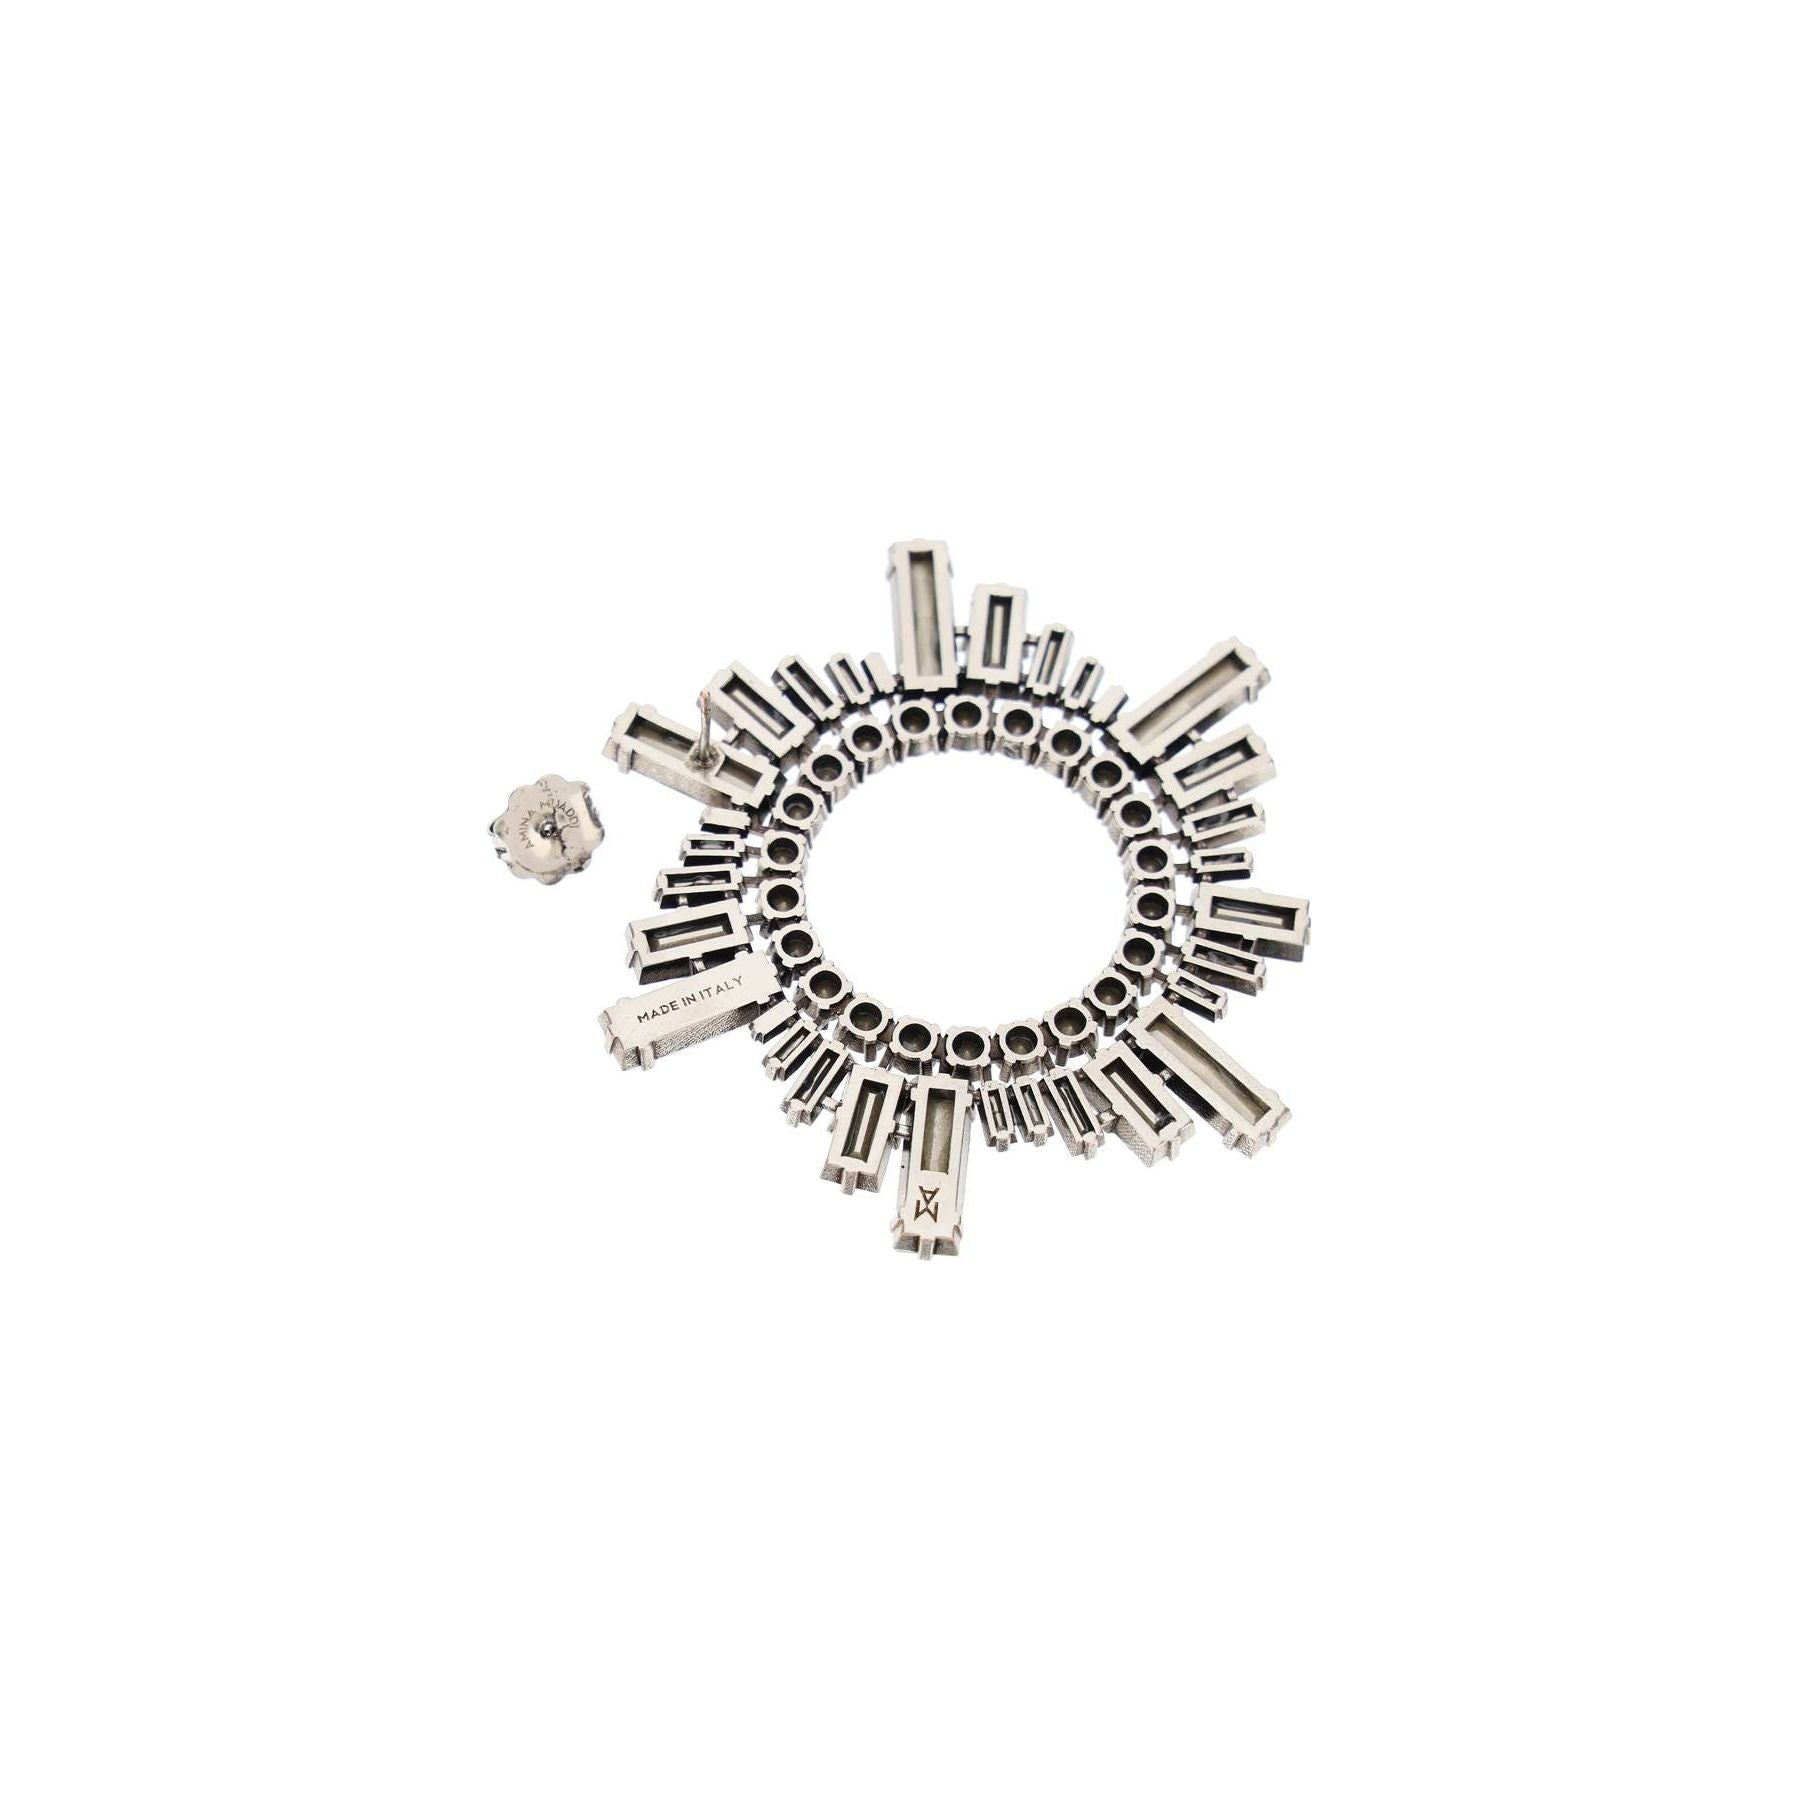 Antiquated Silver Metal Begum Buckle Earrings with Dark Swarovski Crystals